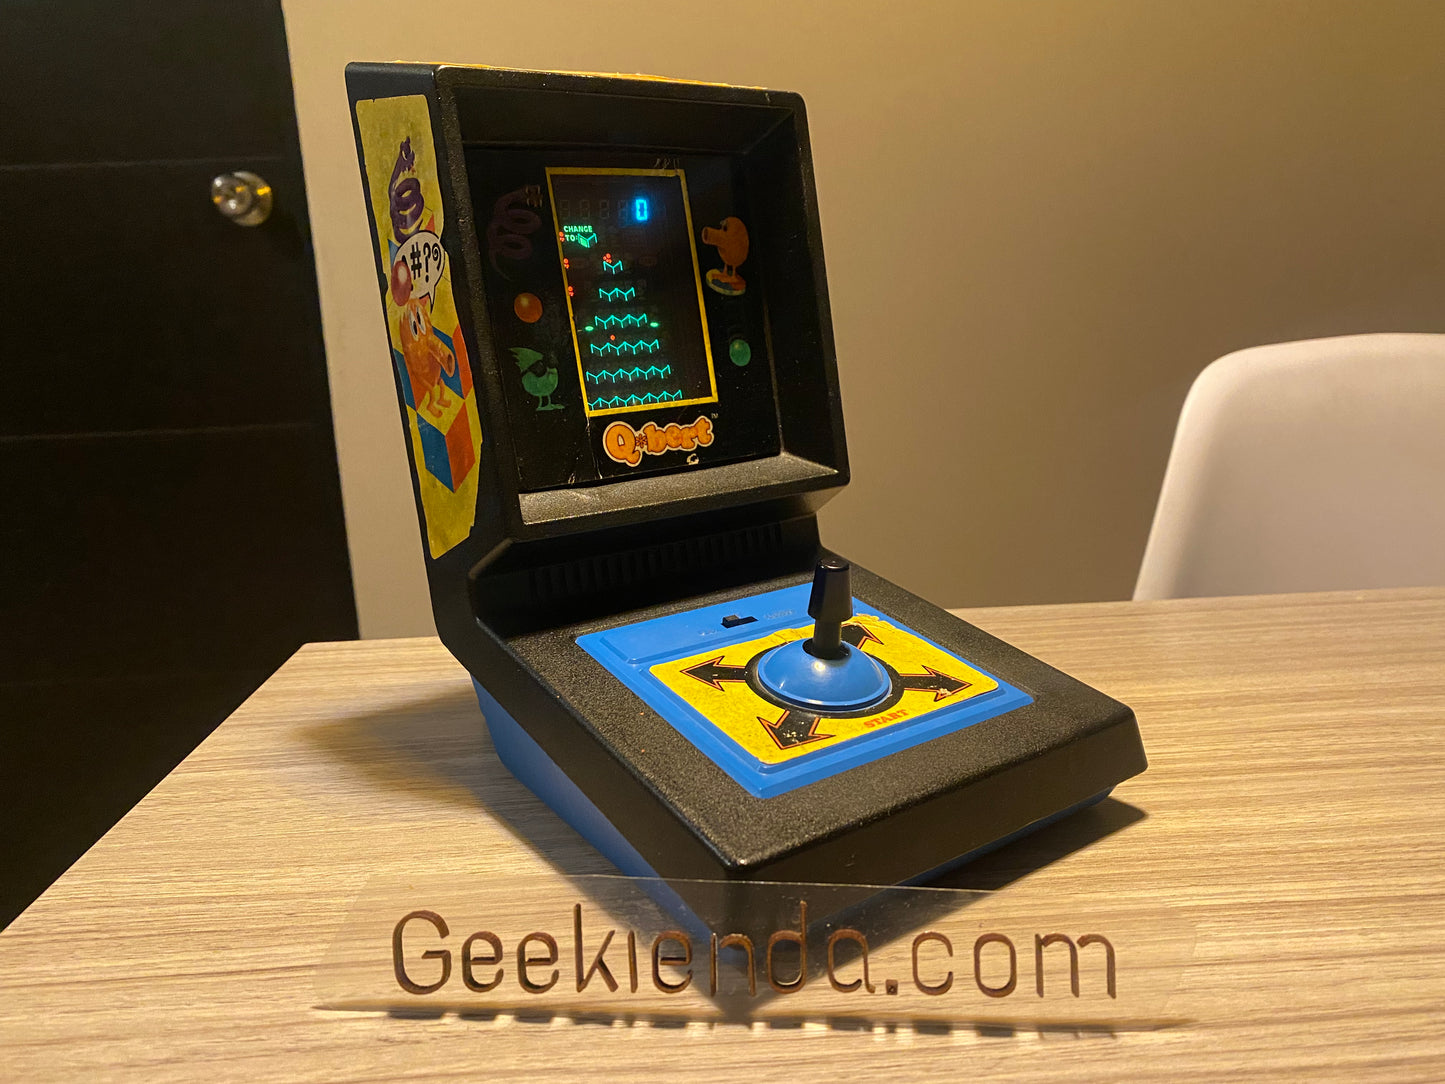 .Geekienda - Videojuegos Q-bert original 1983 consola tipo arcade